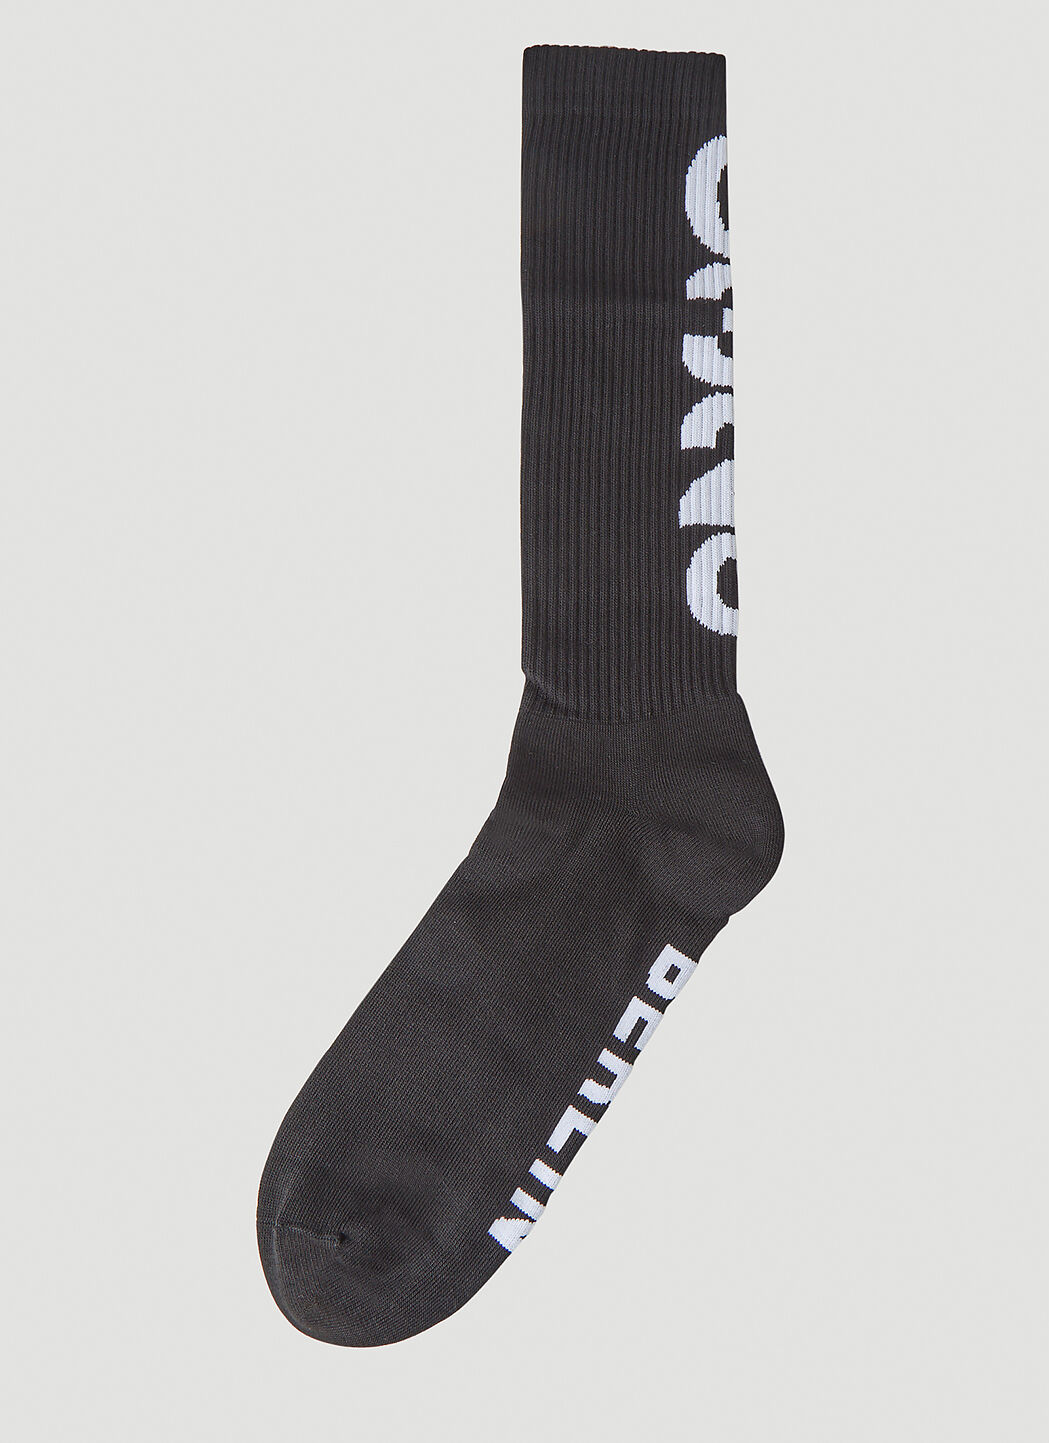 032c Logo Print Long Socks Black cee0156025